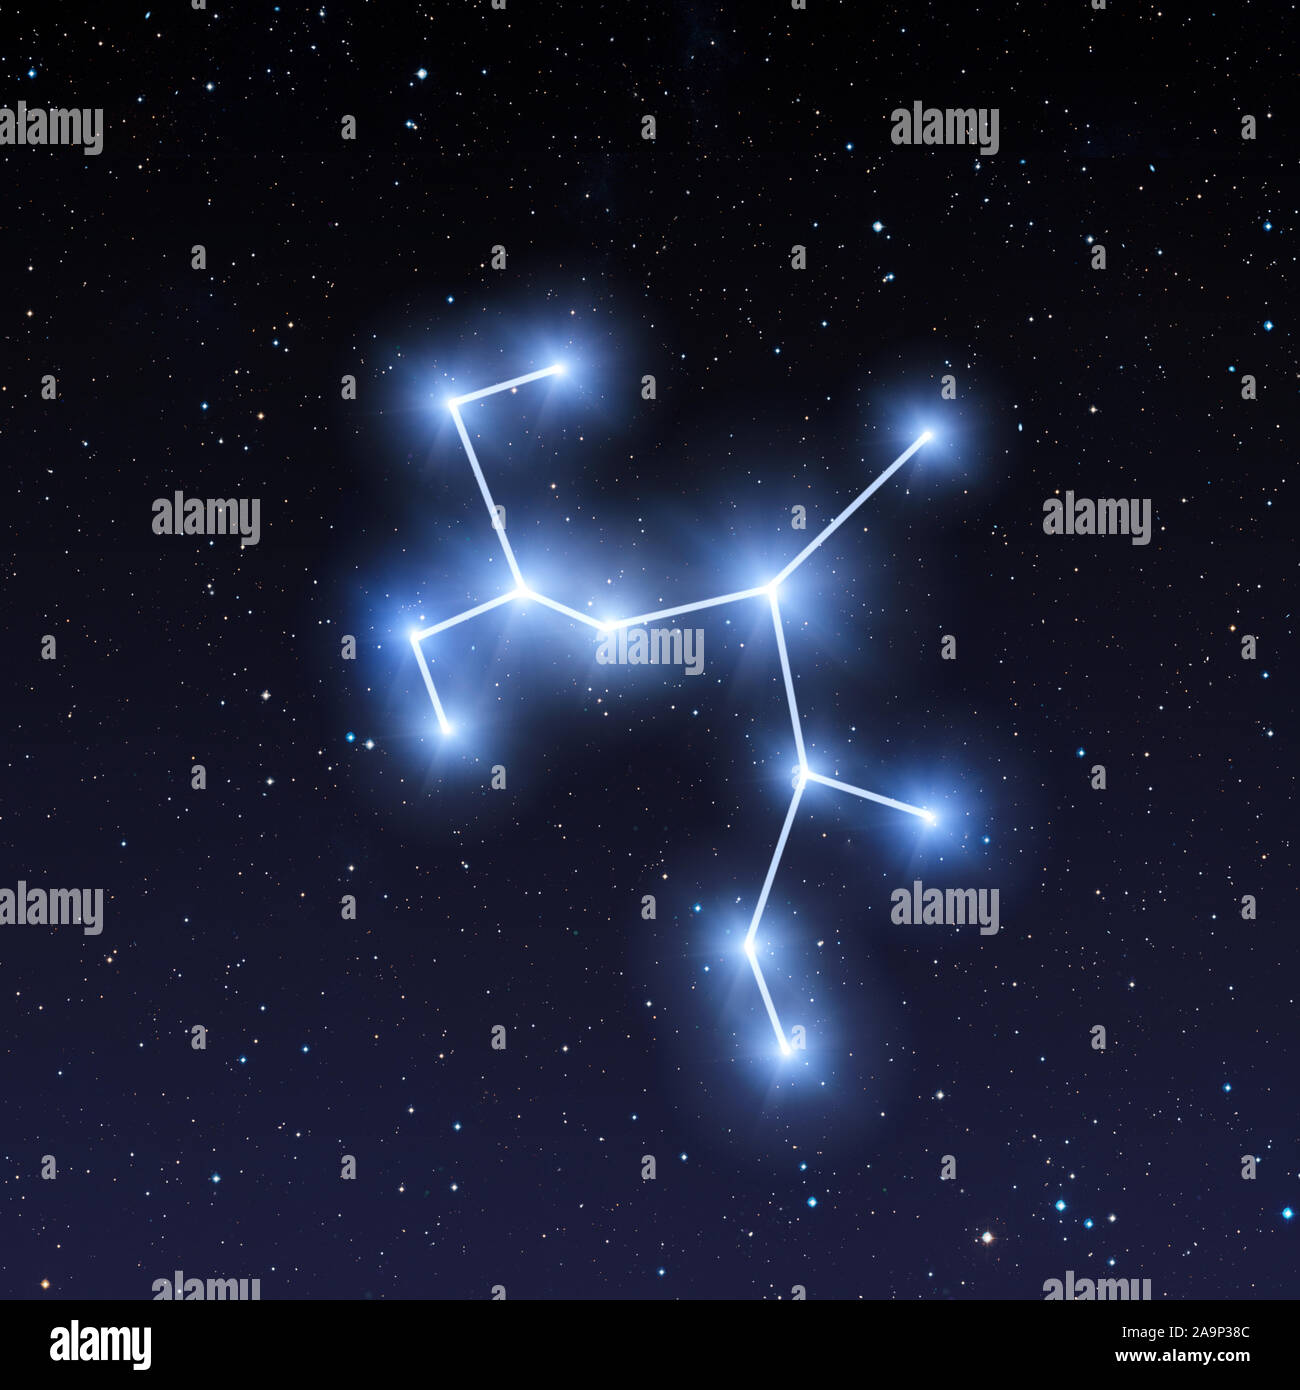 Sagittarius constellation in night sky with bright blue stars Stock Photo